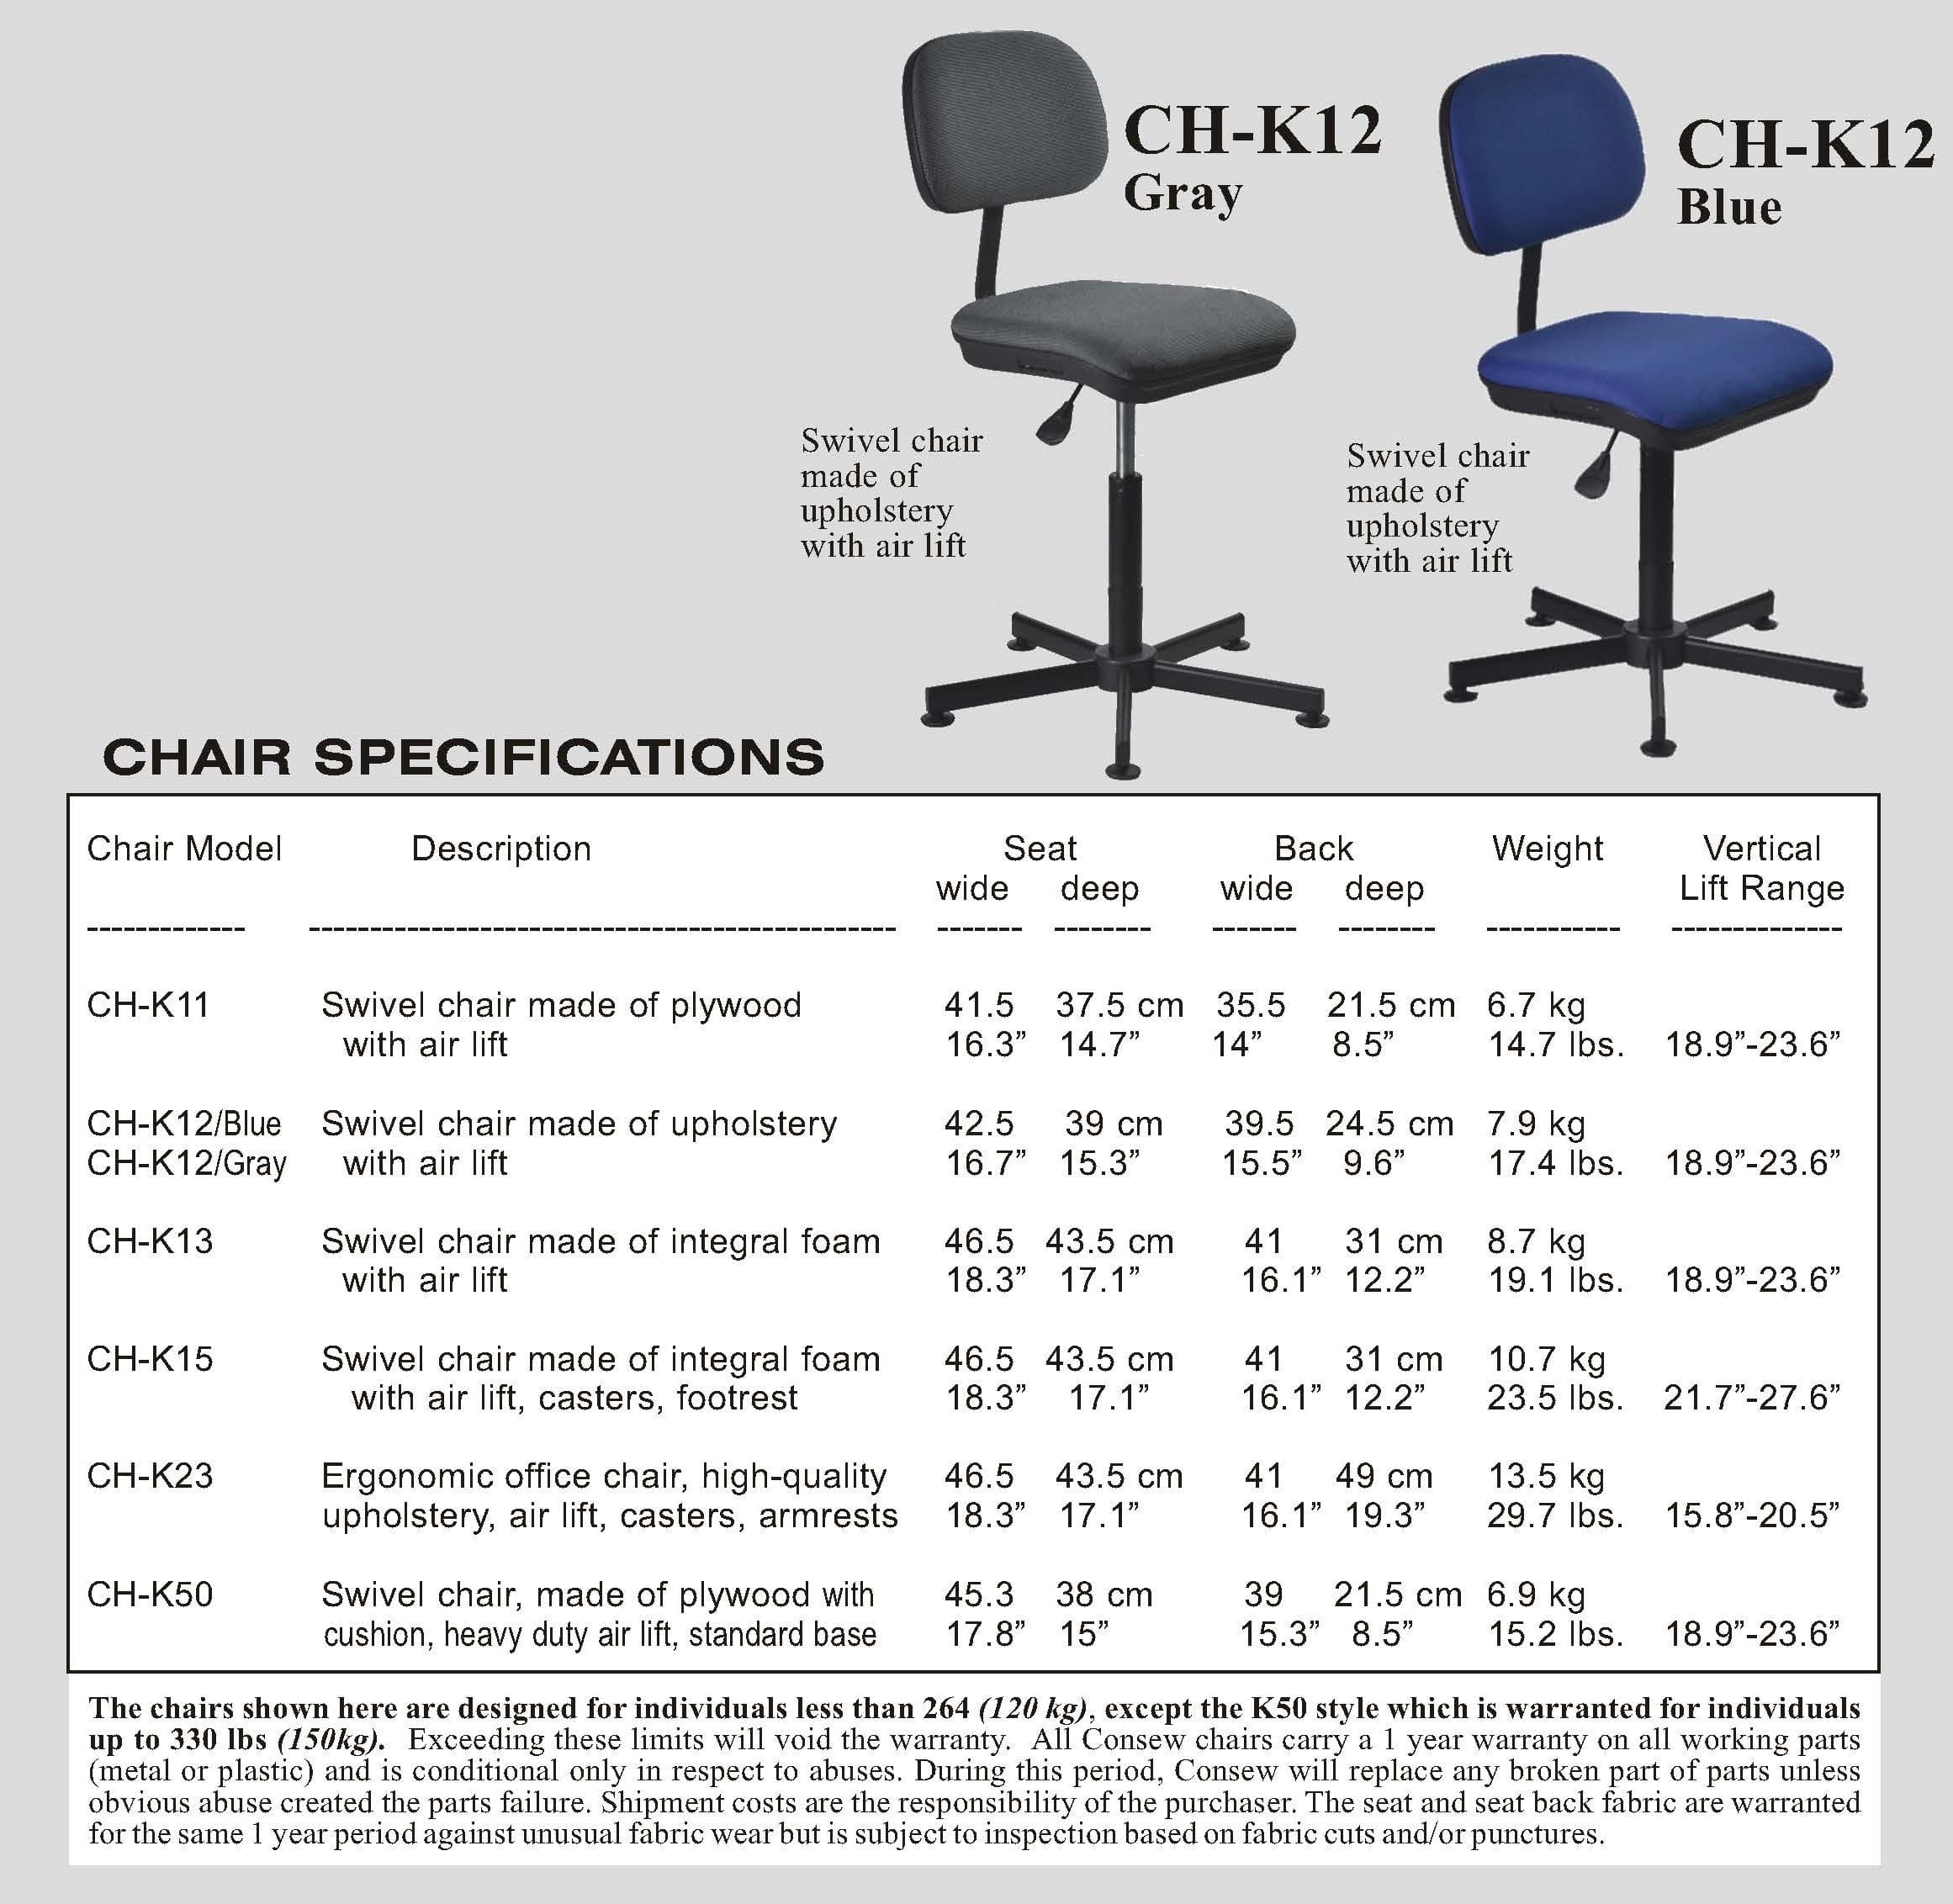 CONSEW ERGONOMIC SEATING
CH-K11, CH-K12, CH-K13, CH-K15, CH-K23, CH-K50